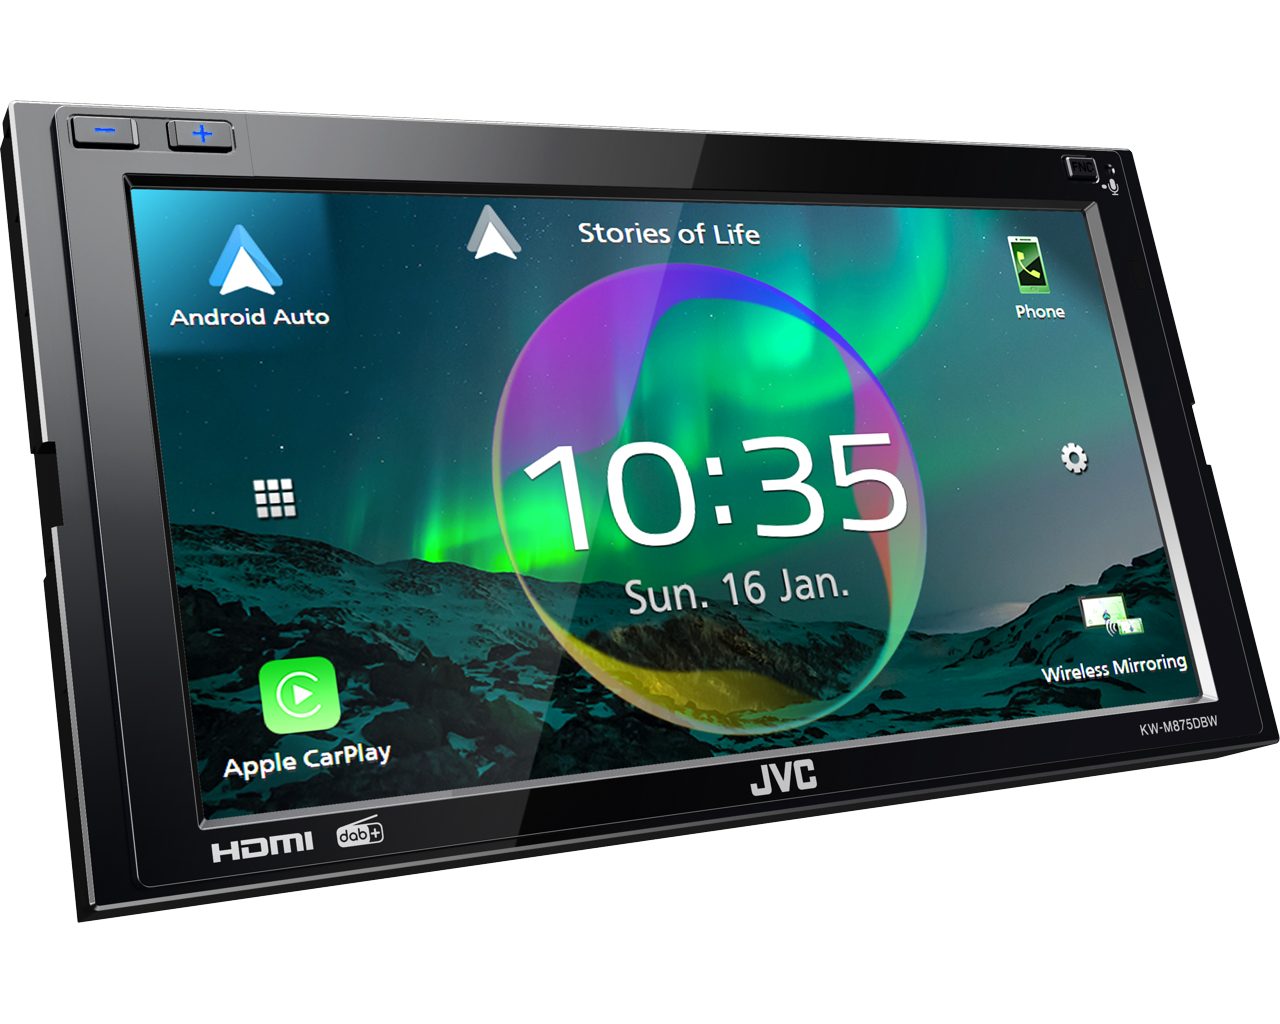 JVC KW-M875DBW DAB+ Bluetoaoth Apple CarPlay Autoradio Android-Auto